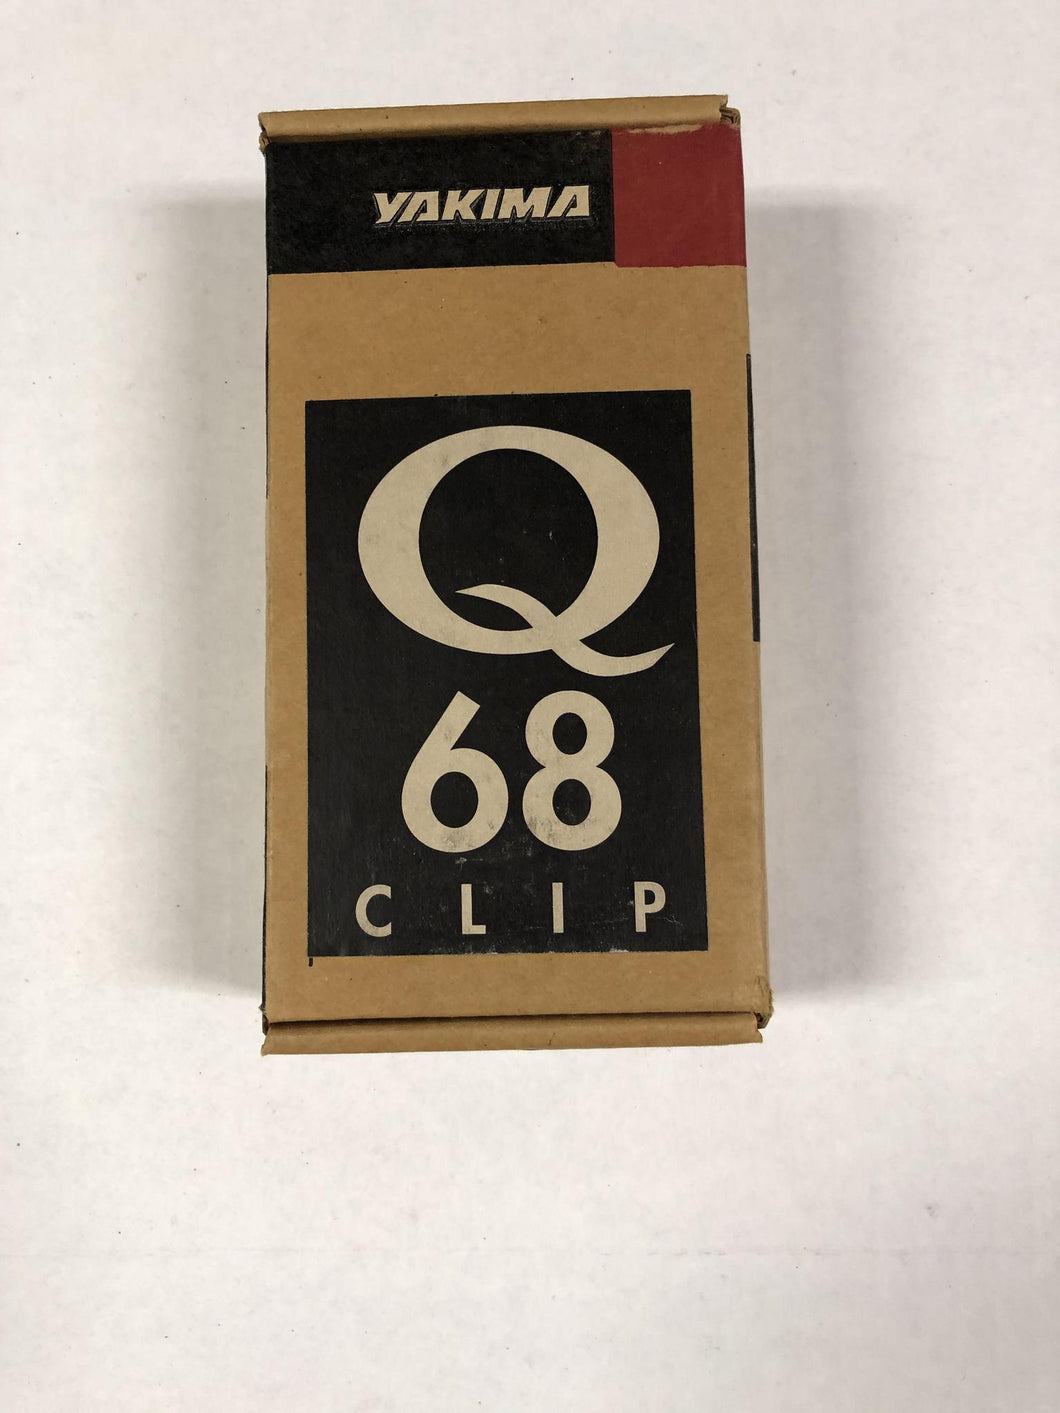 Yakima Q68 Clip